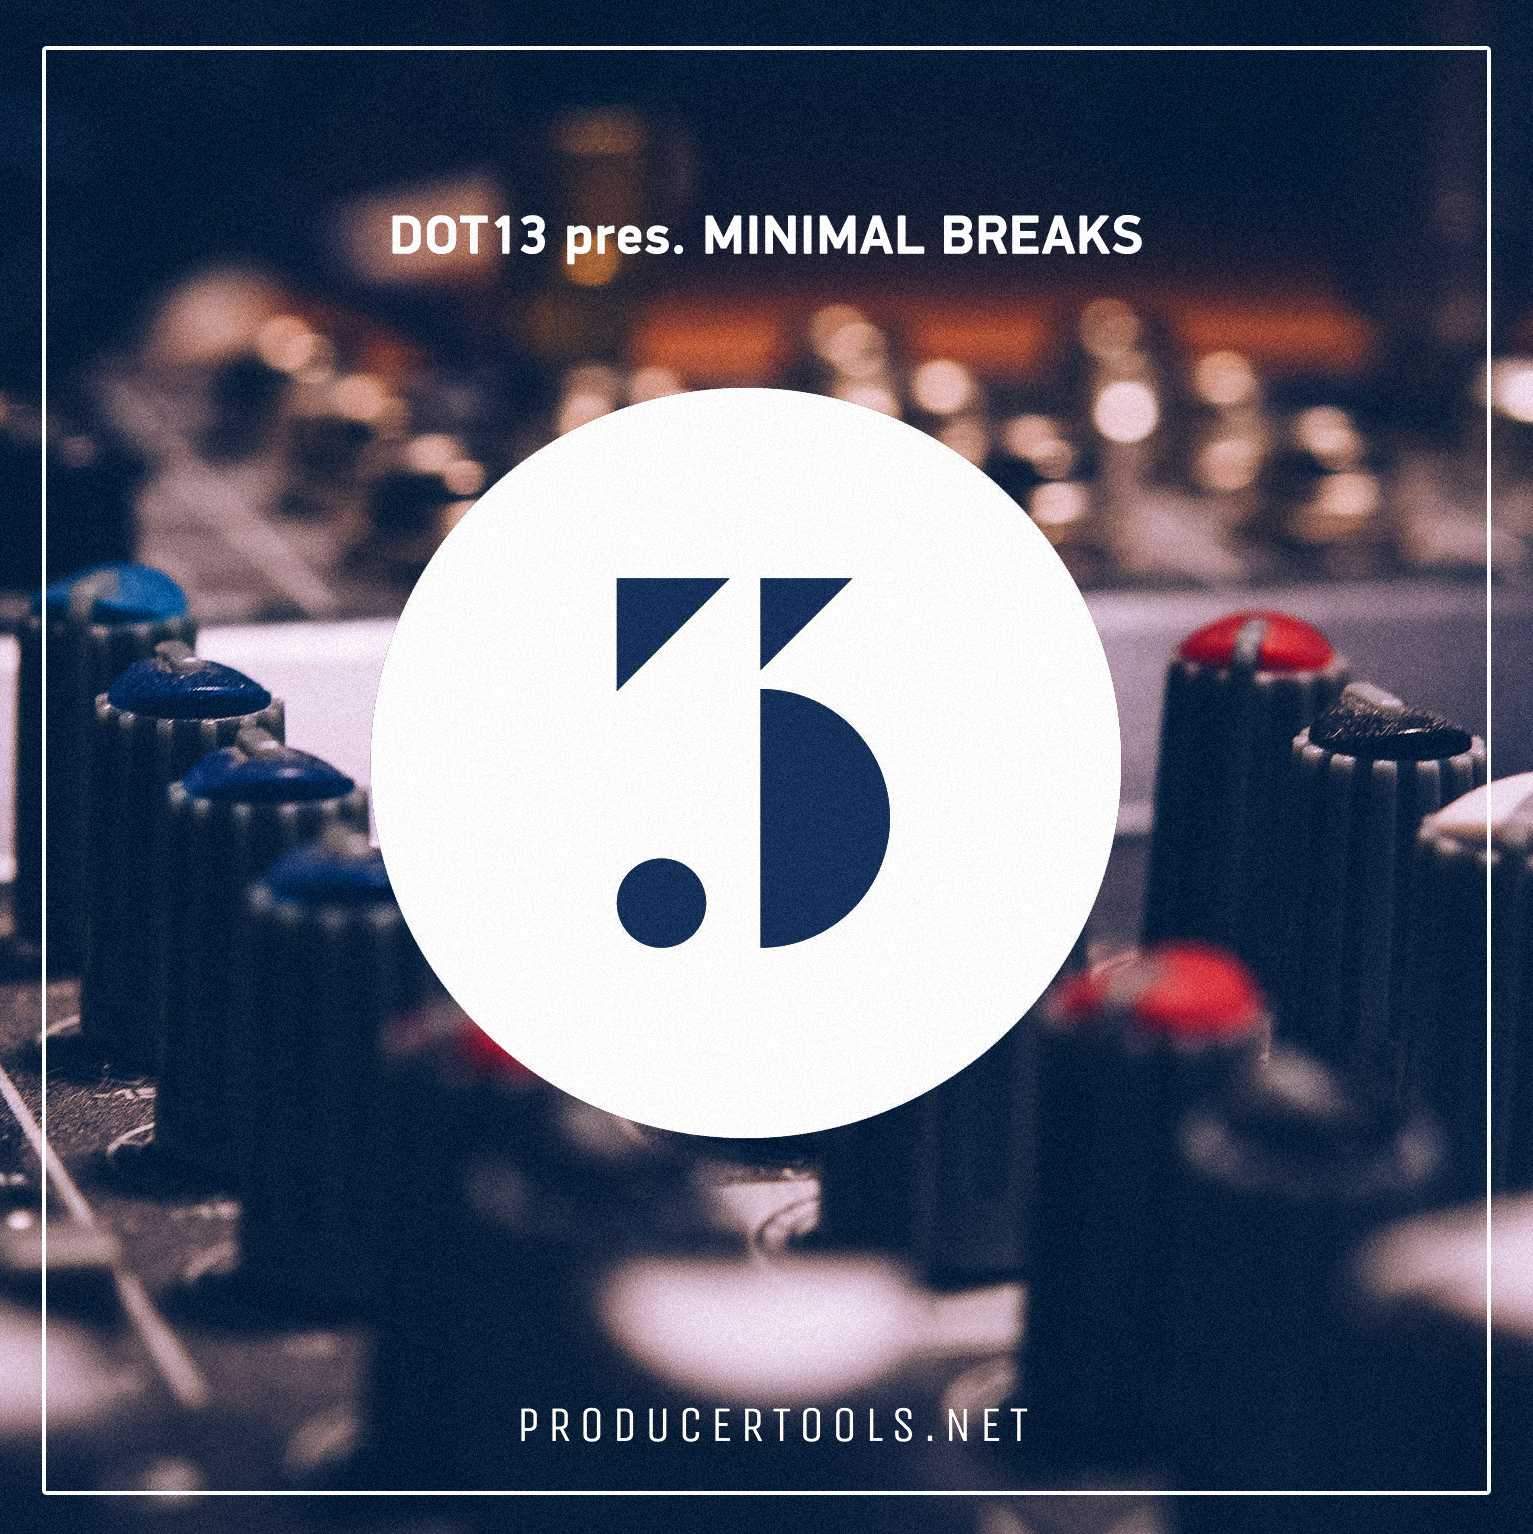 DOT13 pres. MINIMAL BREAKS - producertools.net